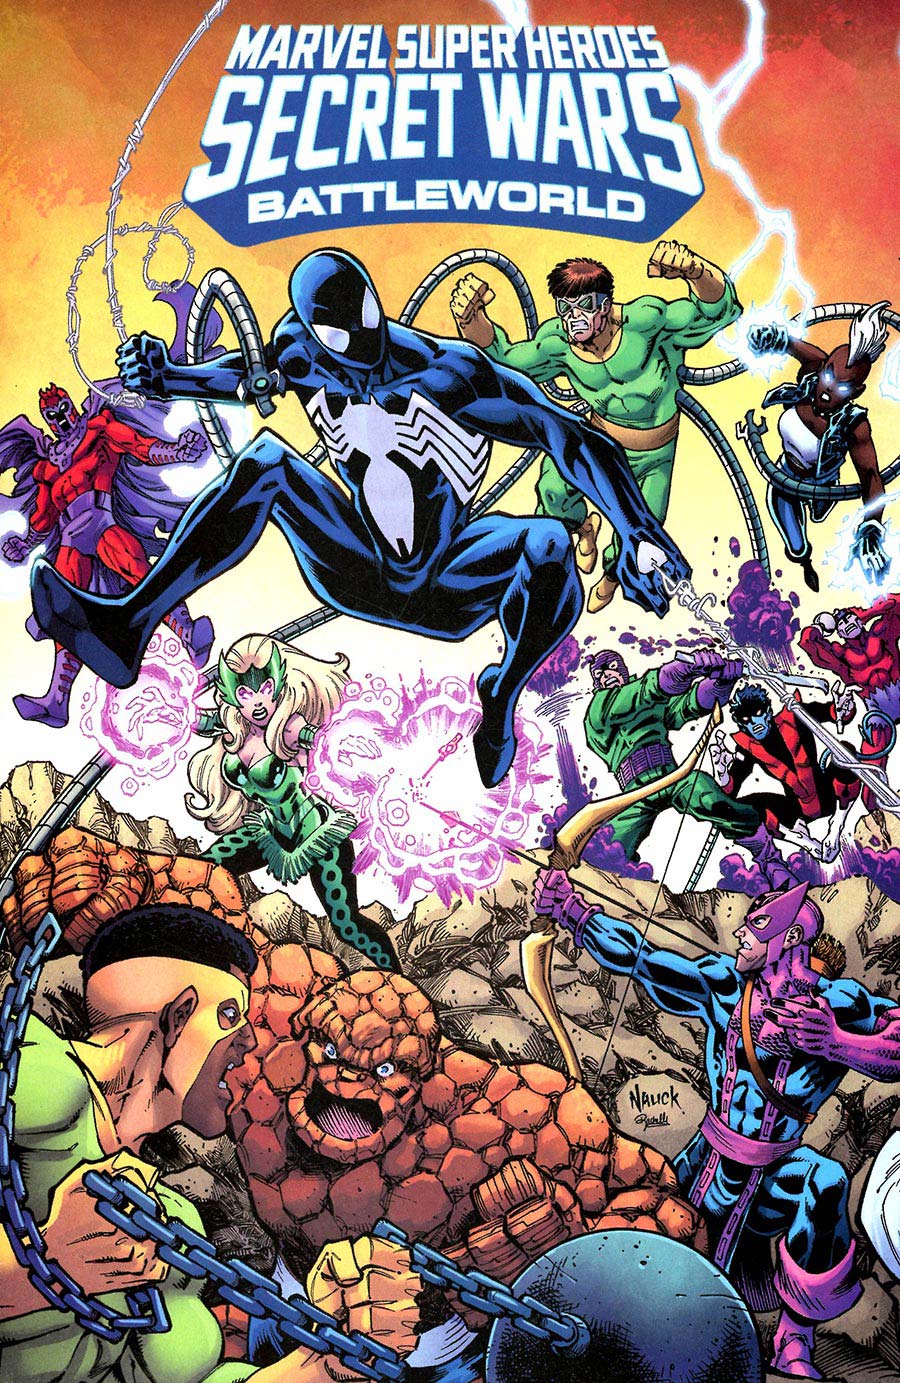 Marvel Super Heroes Secret Wars Battleworld #1 Cover B Variant Todd Nauck Connecting Cover